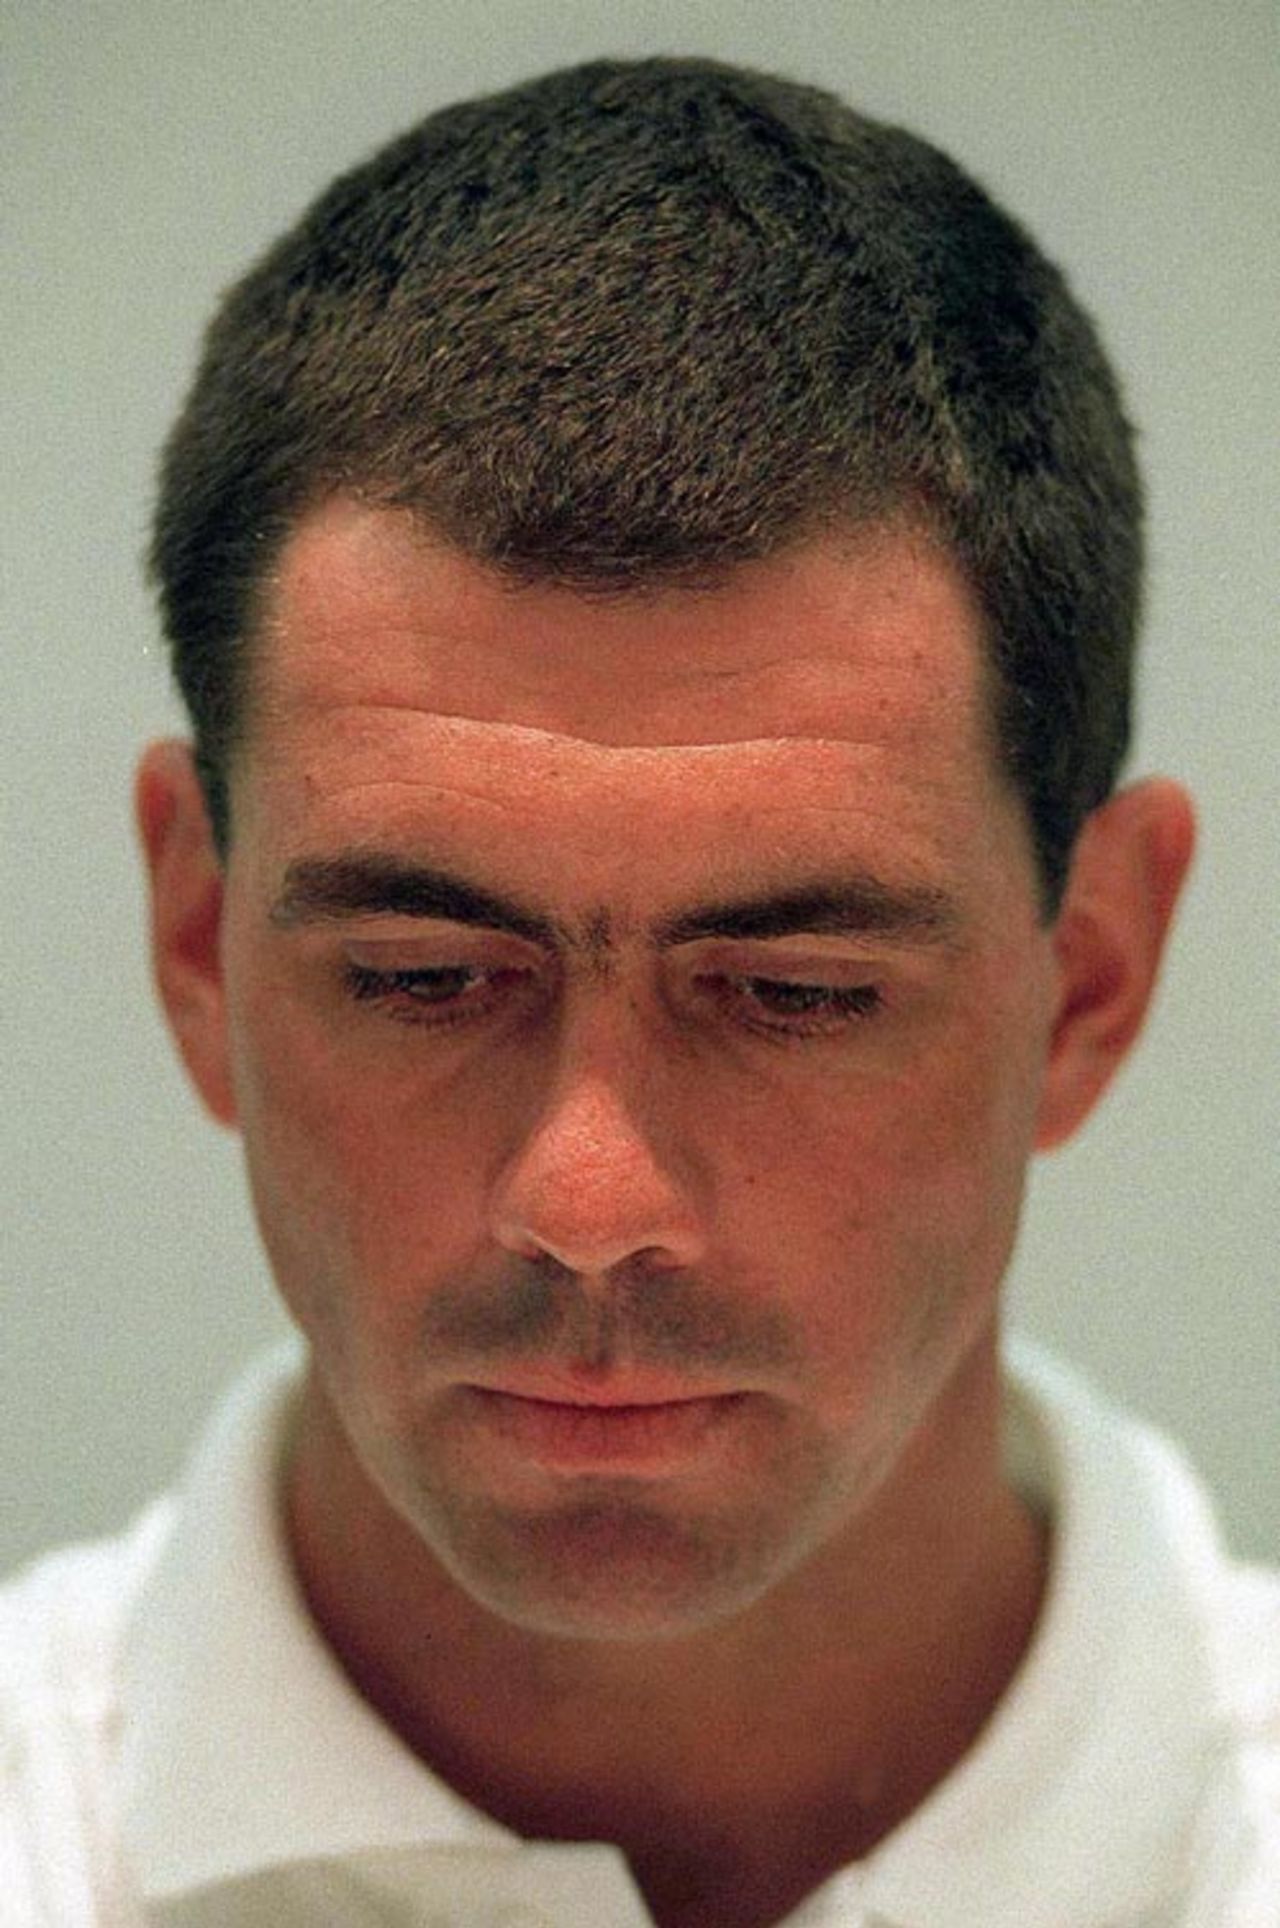 Hansie Cronje, head bowed, faces the media, April 11, 2000